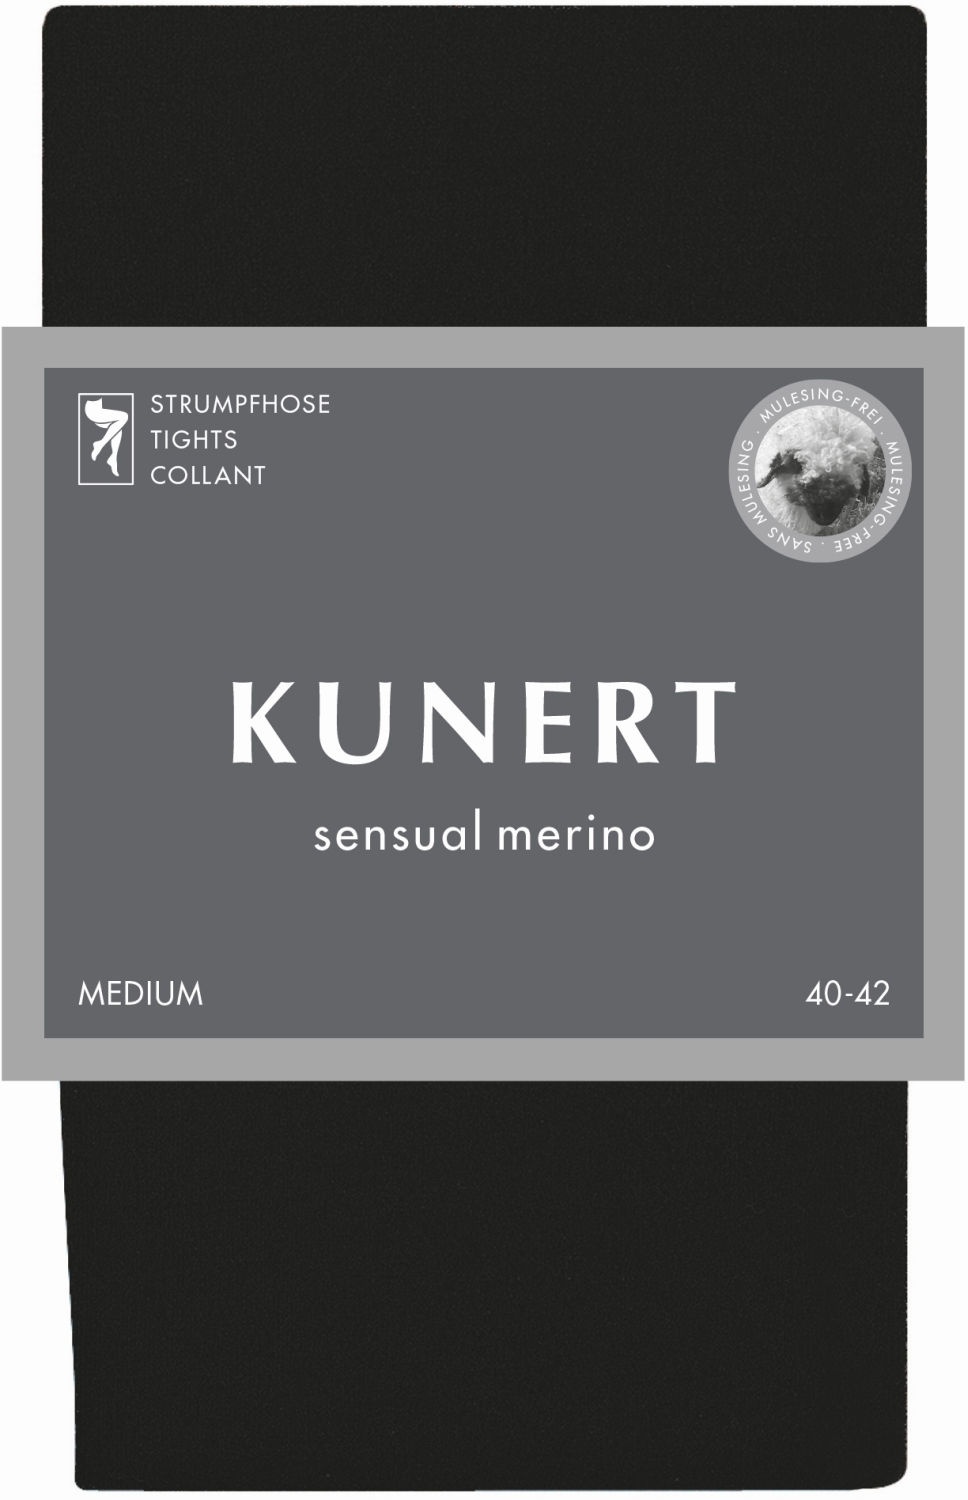 Kunert Sensual Merino Strumpfhose 1 Stück | 44-46 (XL) | Brown (KU-8220)